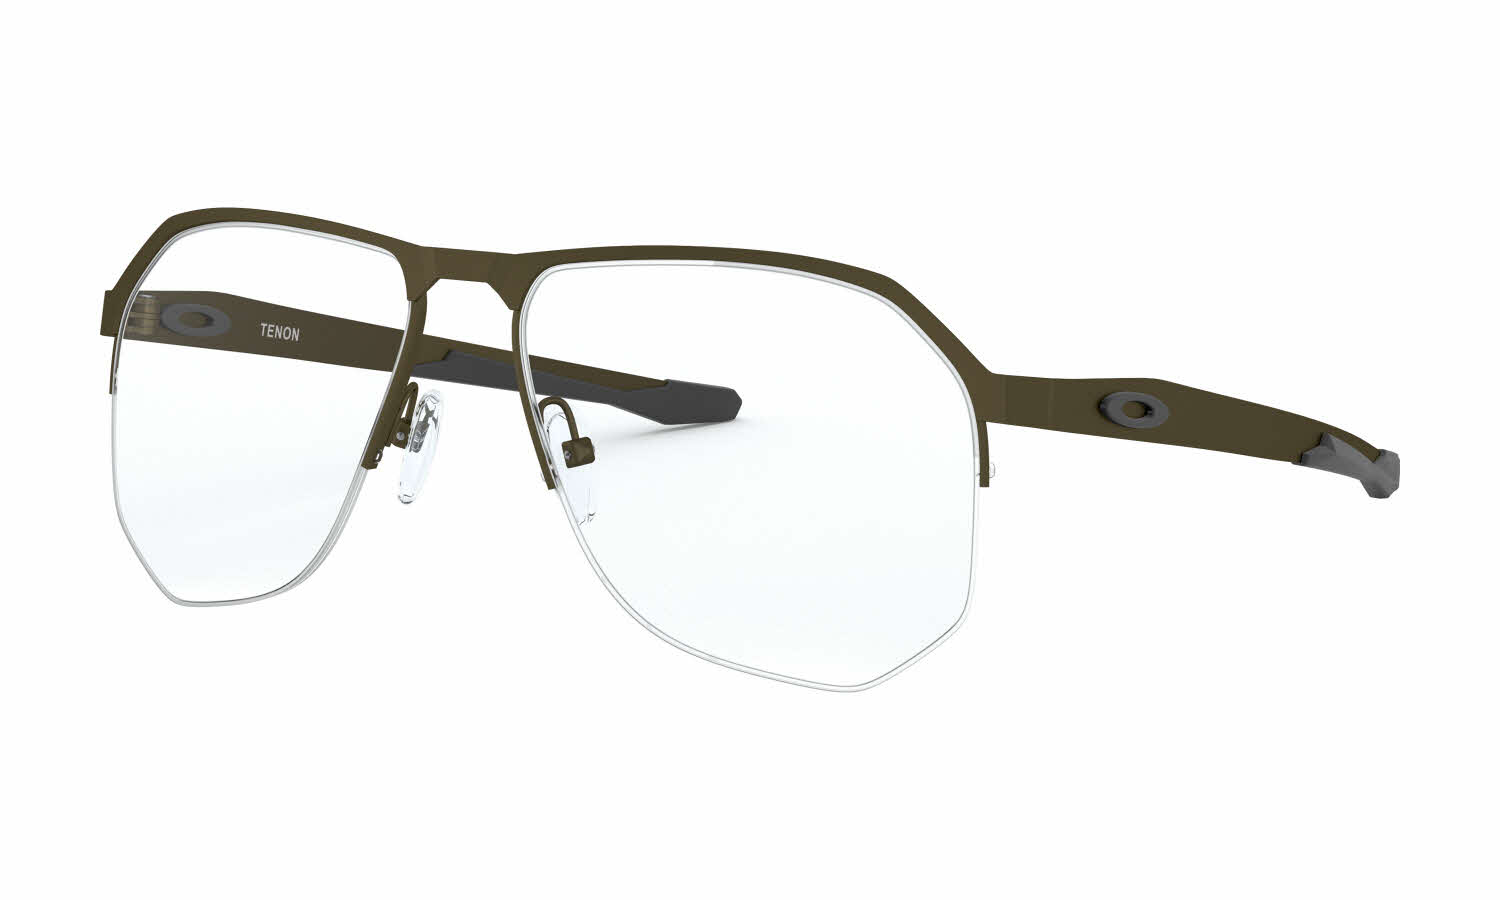 Oakley Tenon Eyeglasses